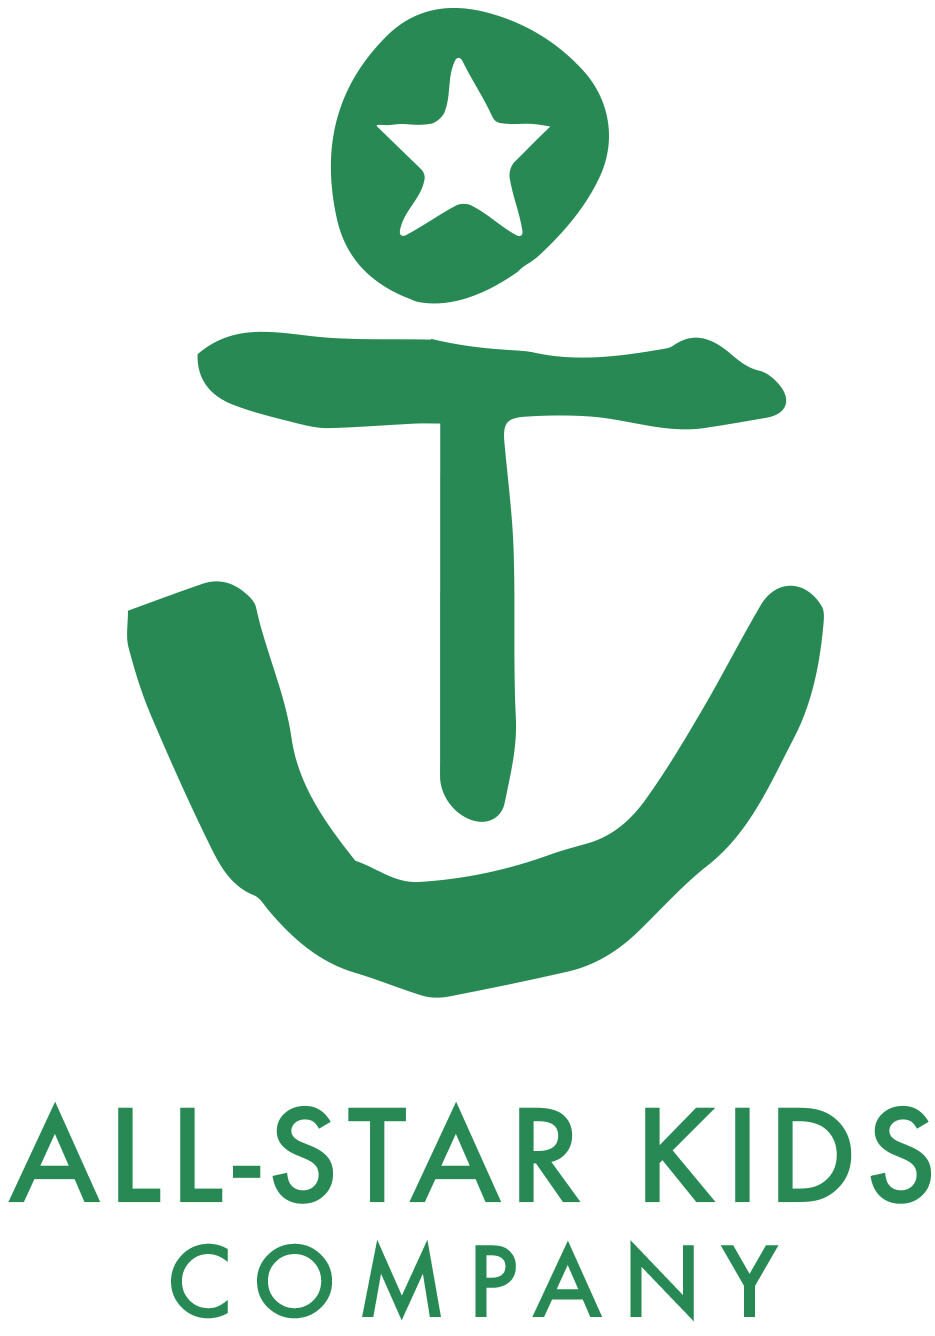 All-Star Kids Company